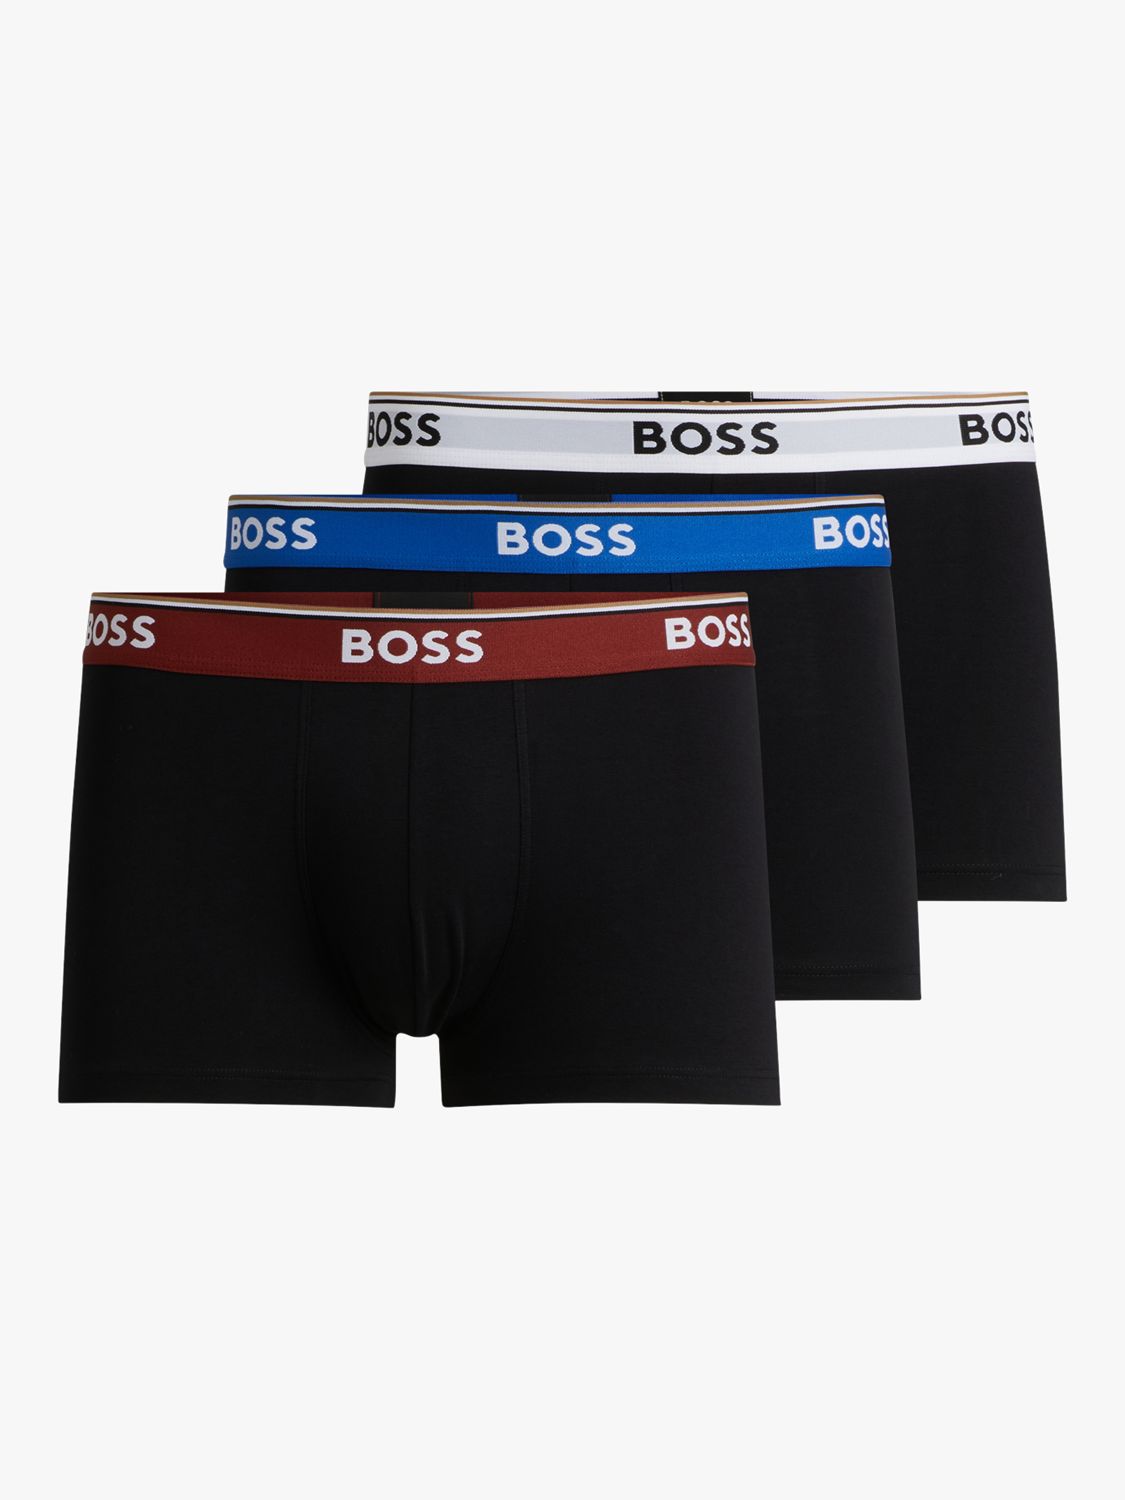 BOSS Essential Trunks, Pack of 3, Black, S